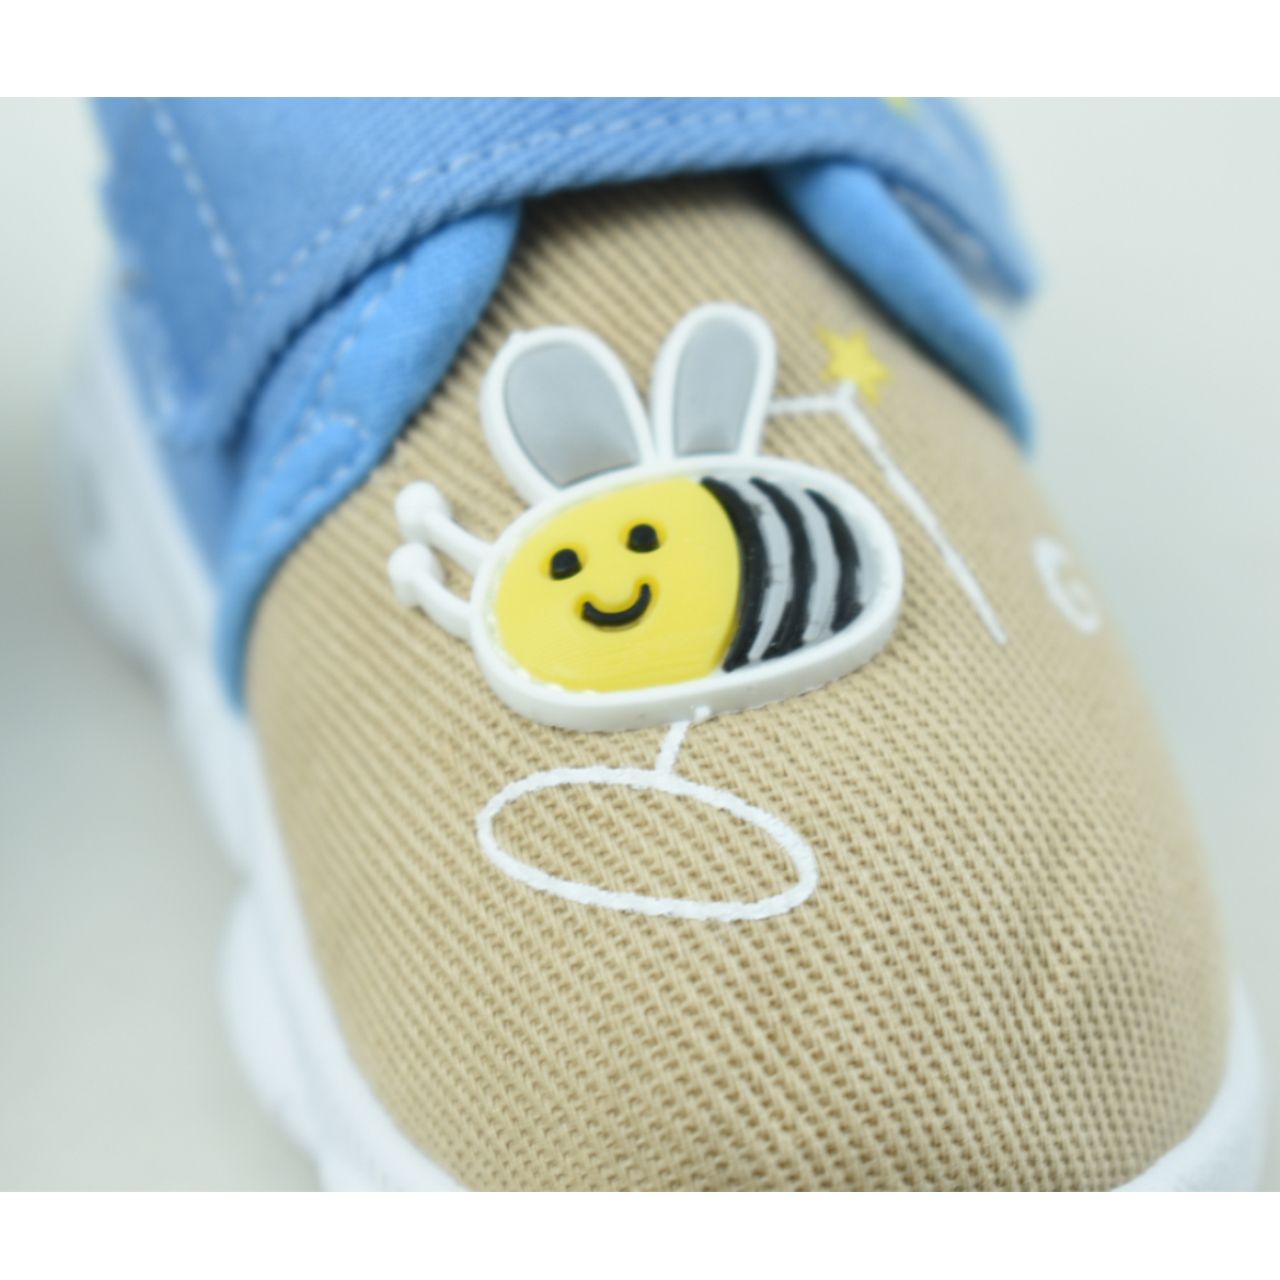 کفش نوزادی مدل زنبورعسل کد C-8231 -  - 6